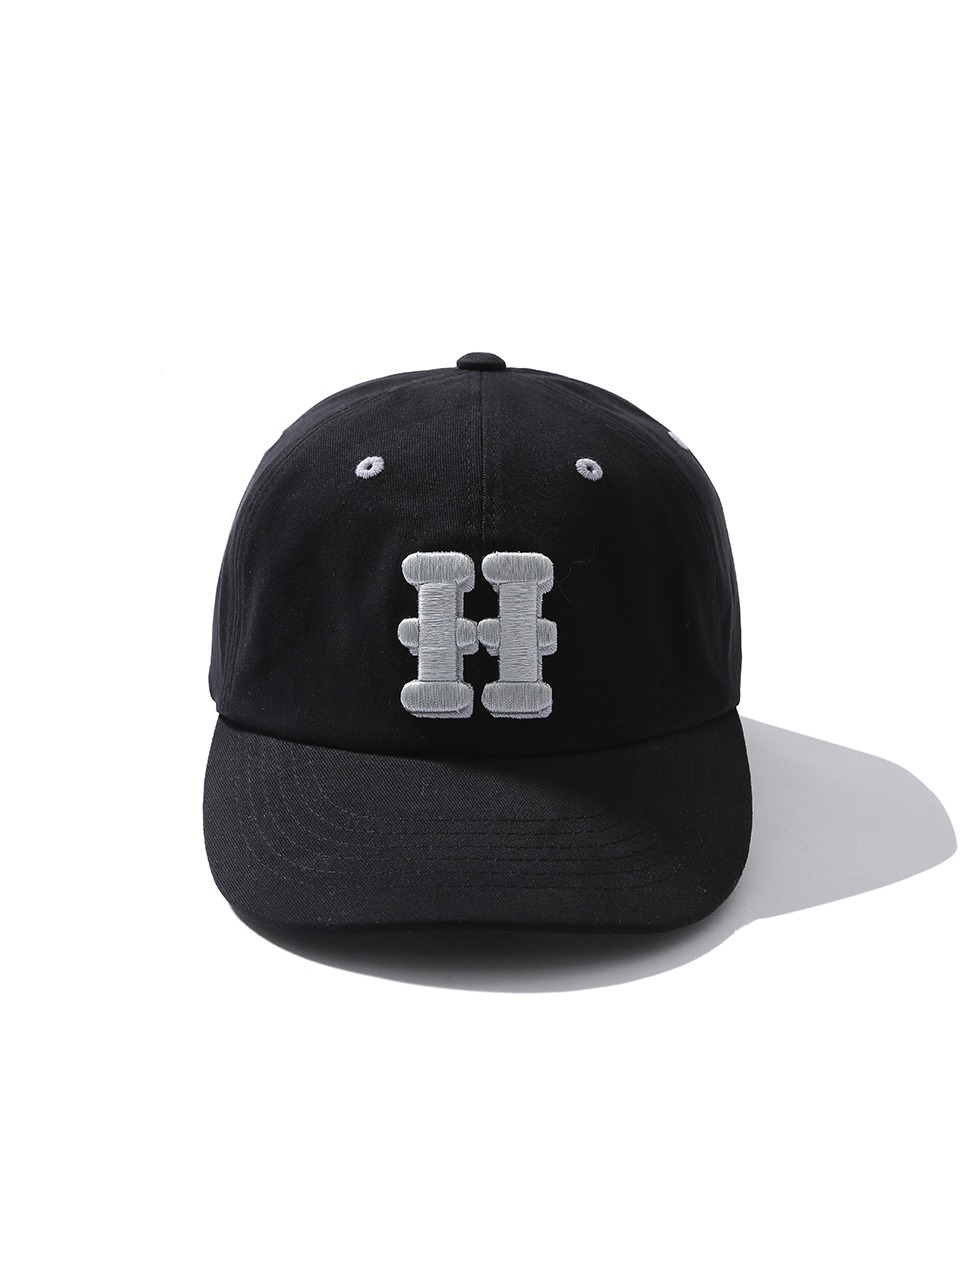 HUTOAN - HERITAGE BALL CAP (BLACK)